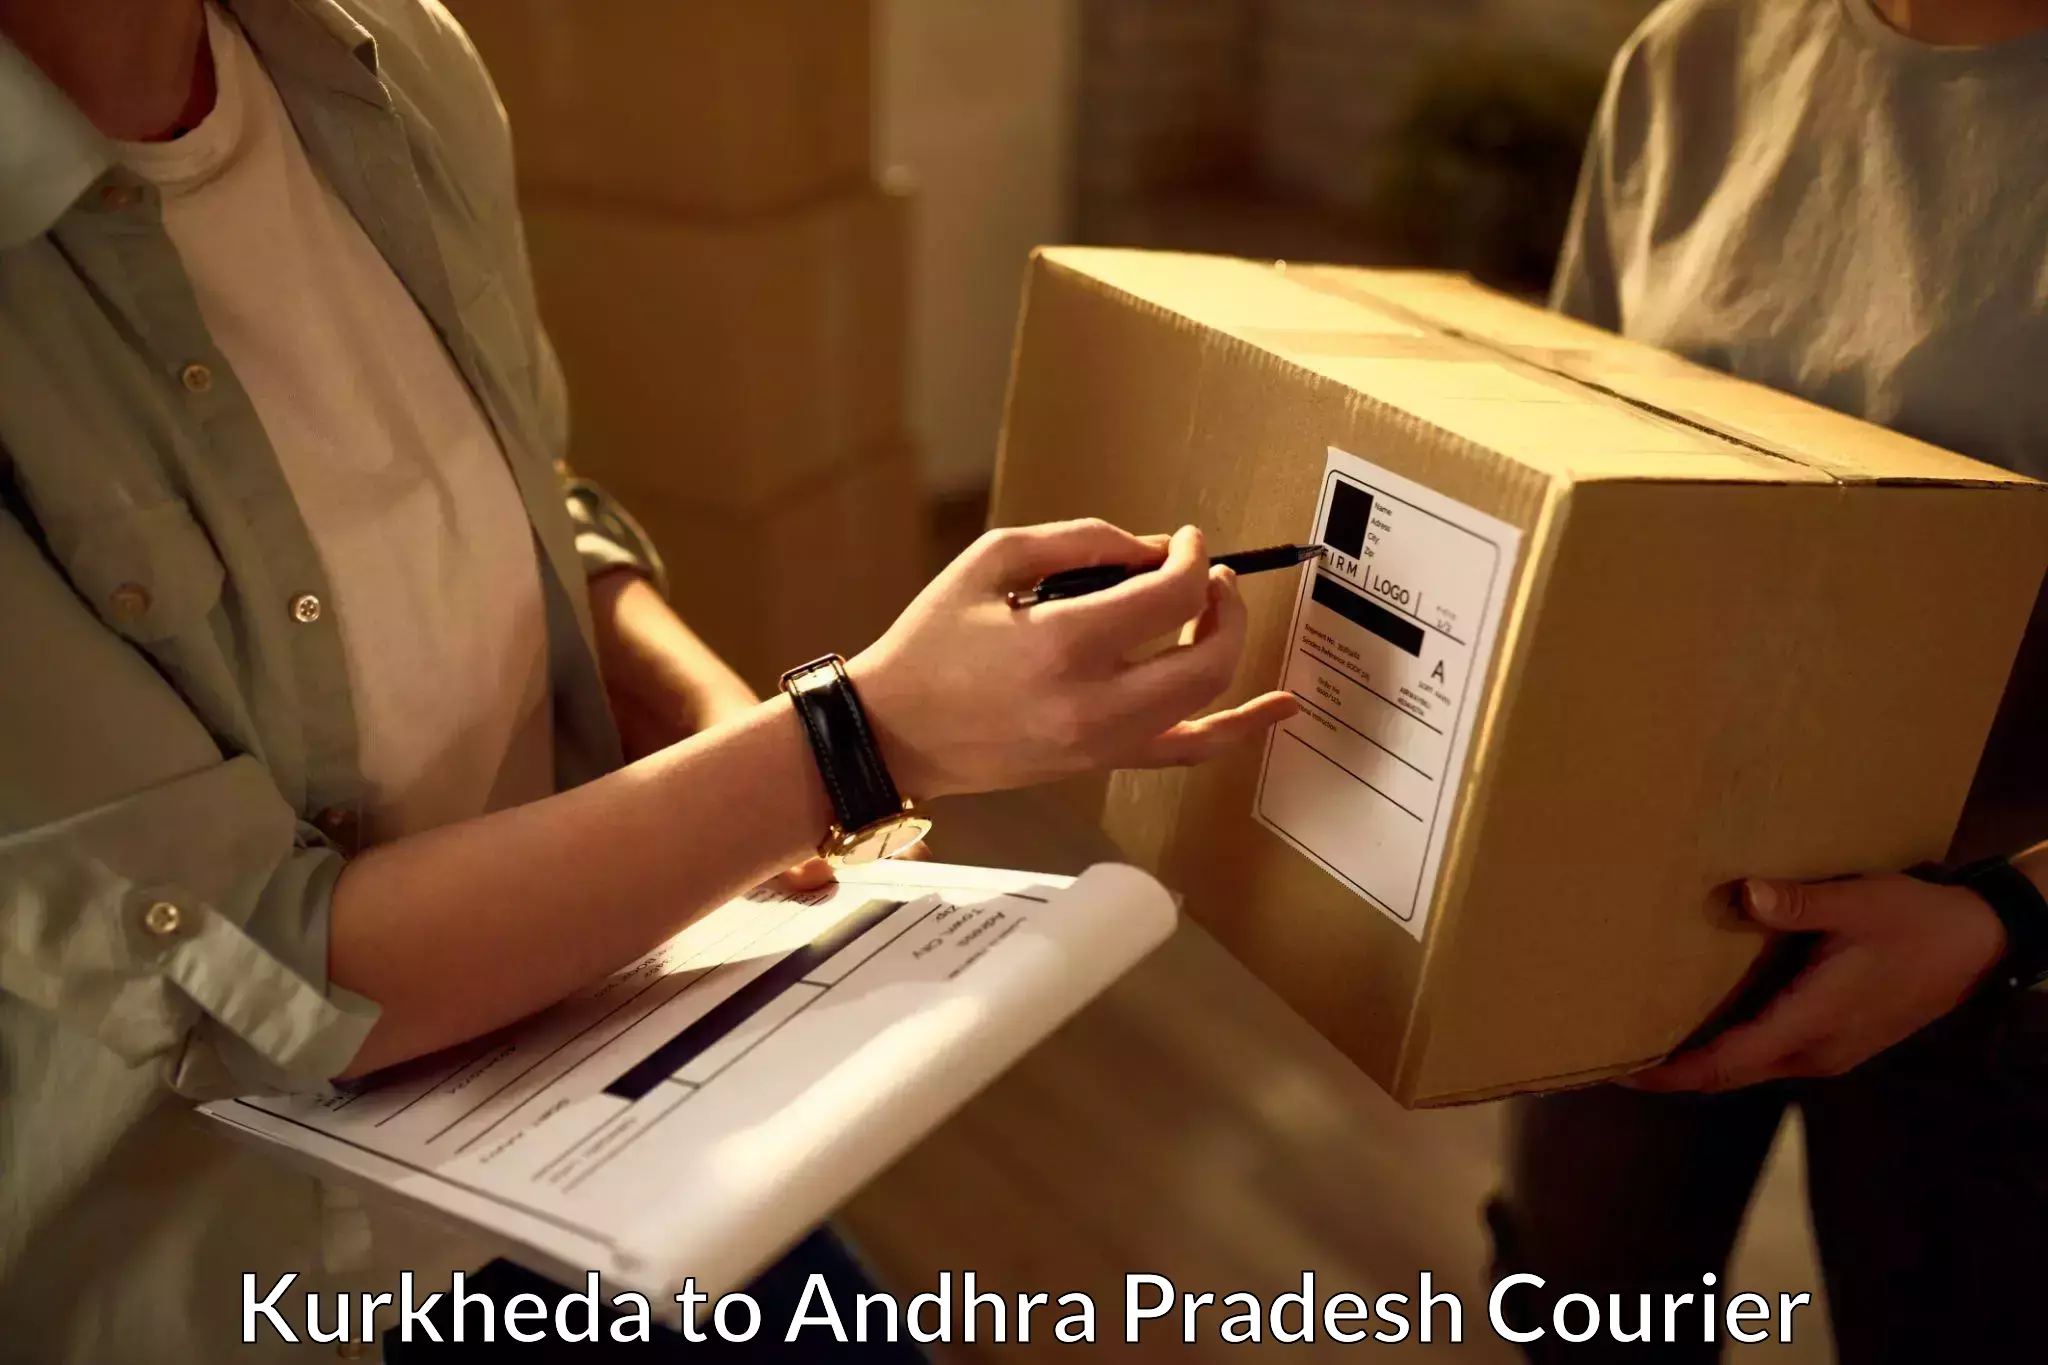 Reliable delivery network Kurkheda to Pedapadu